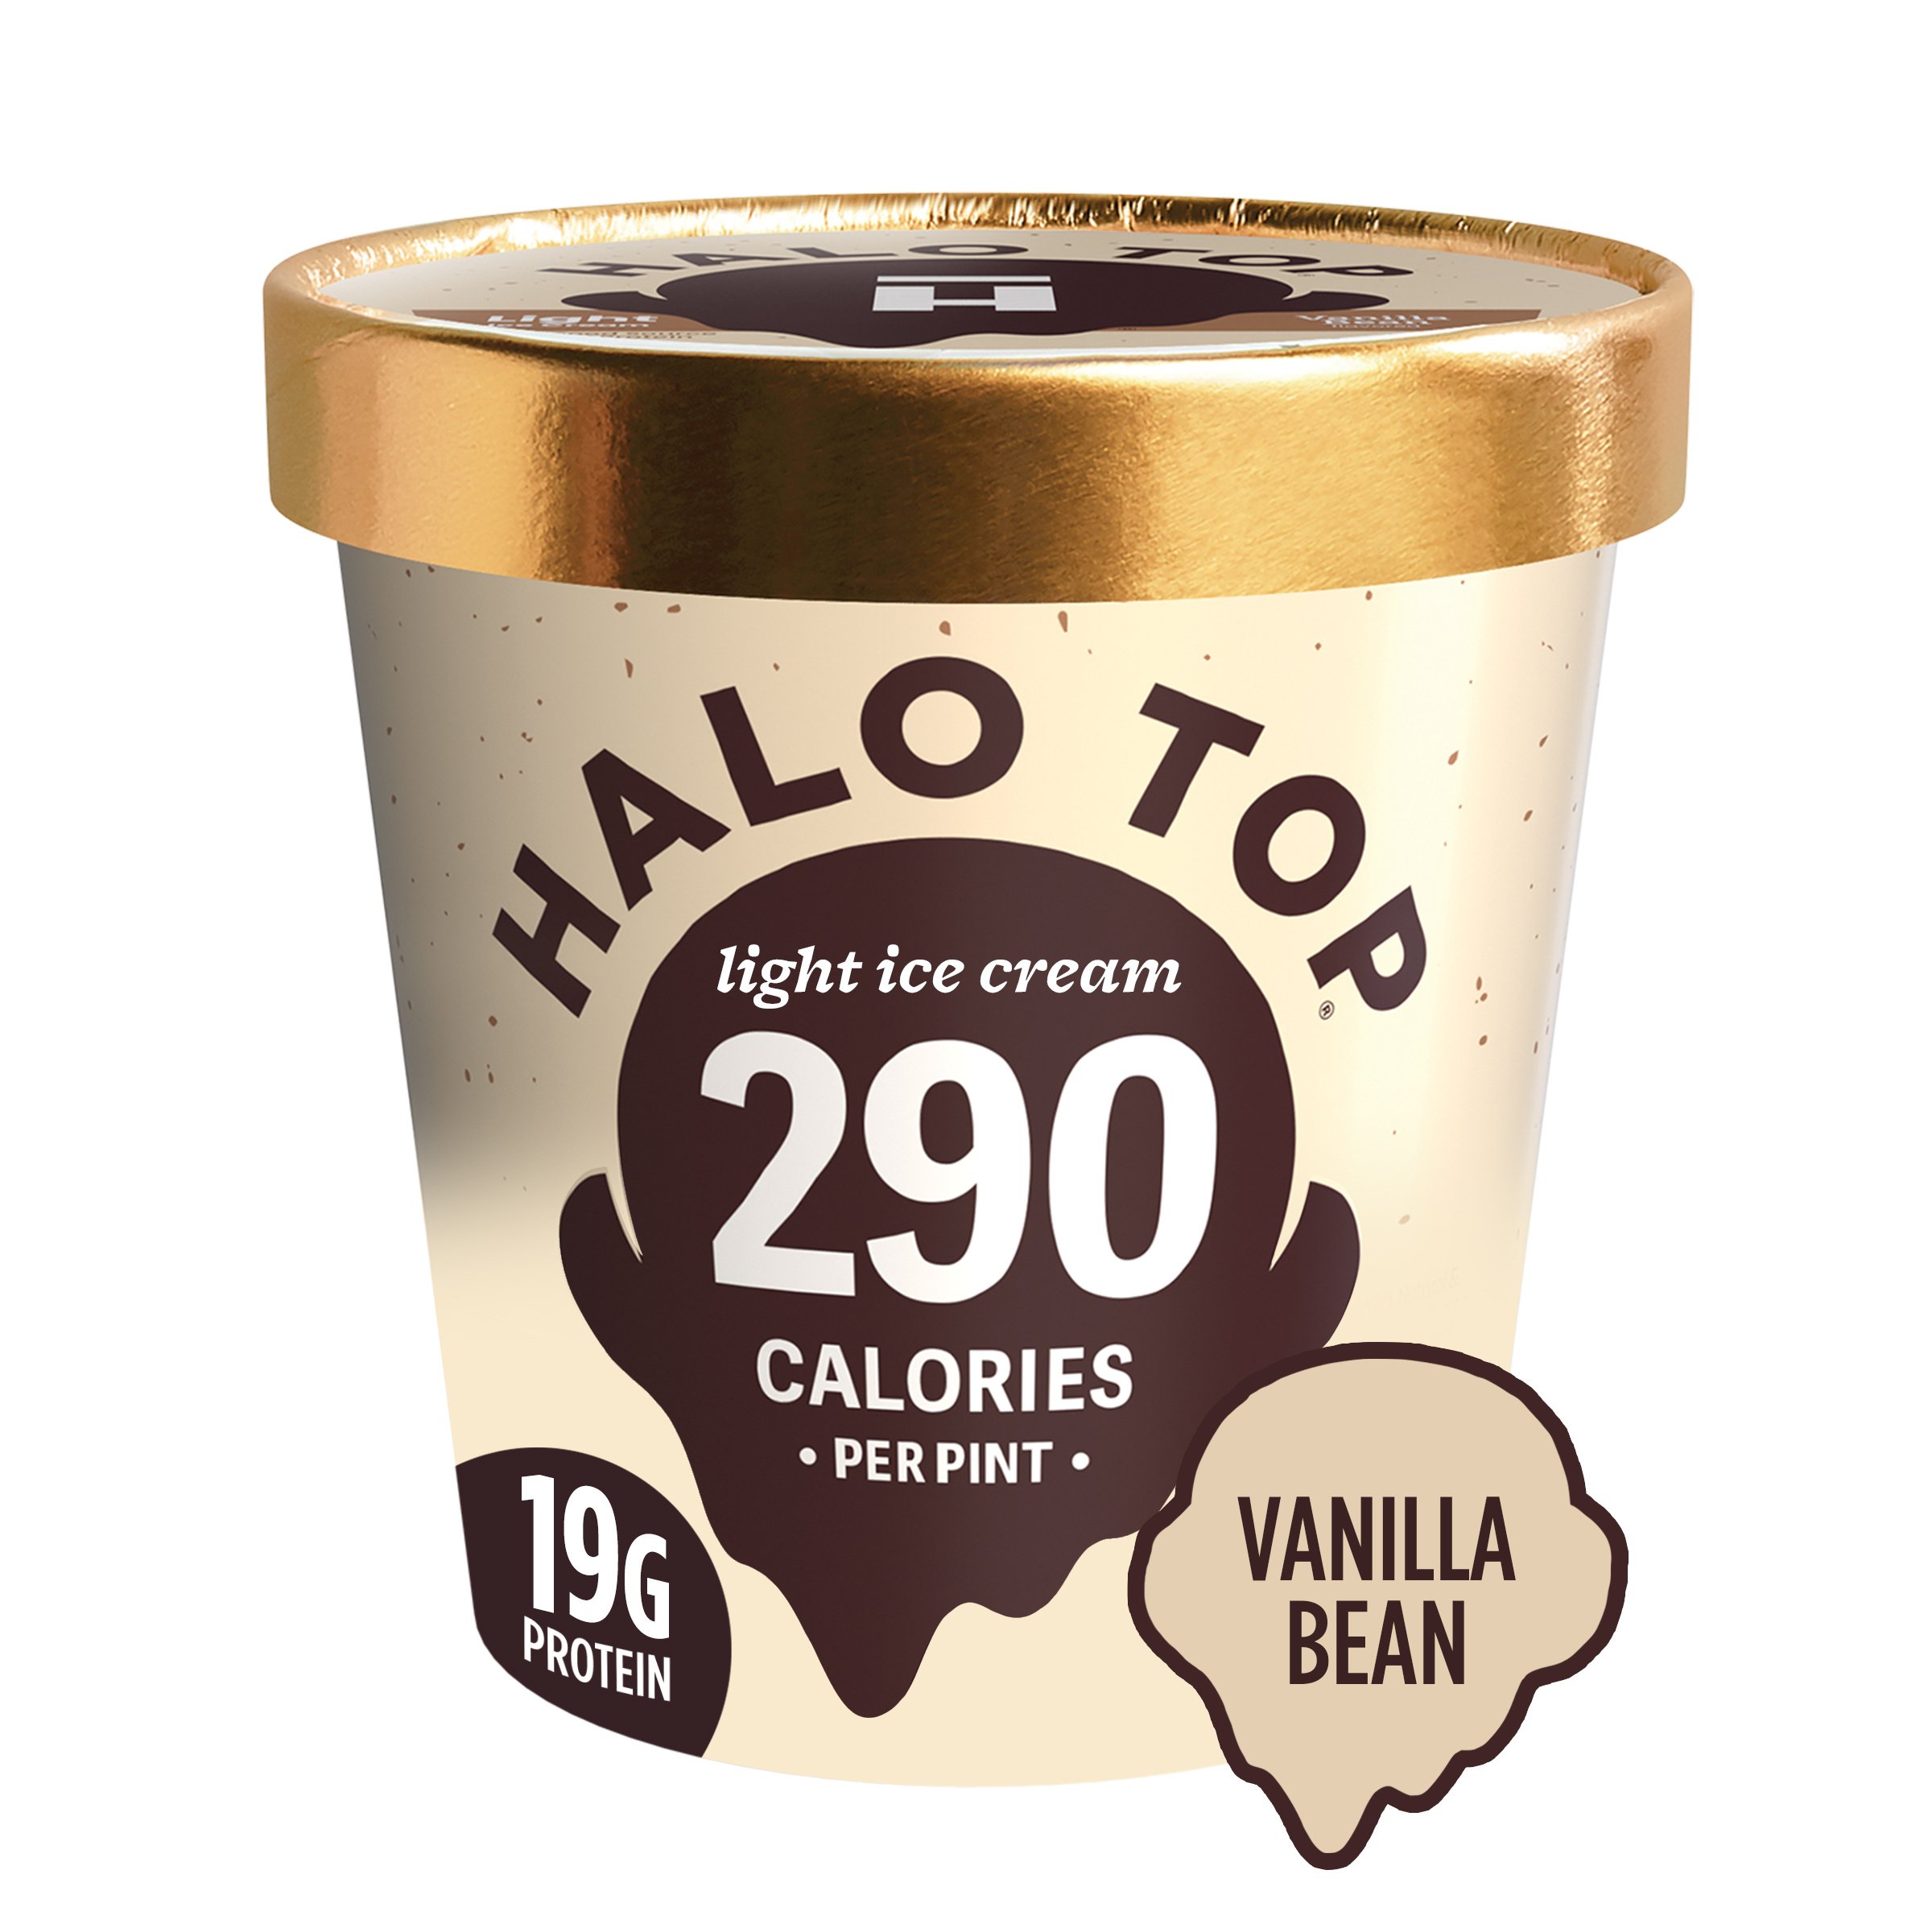 Halo Top Vanilla Bean Light Ice Cream Shop Ice Cream At H E B